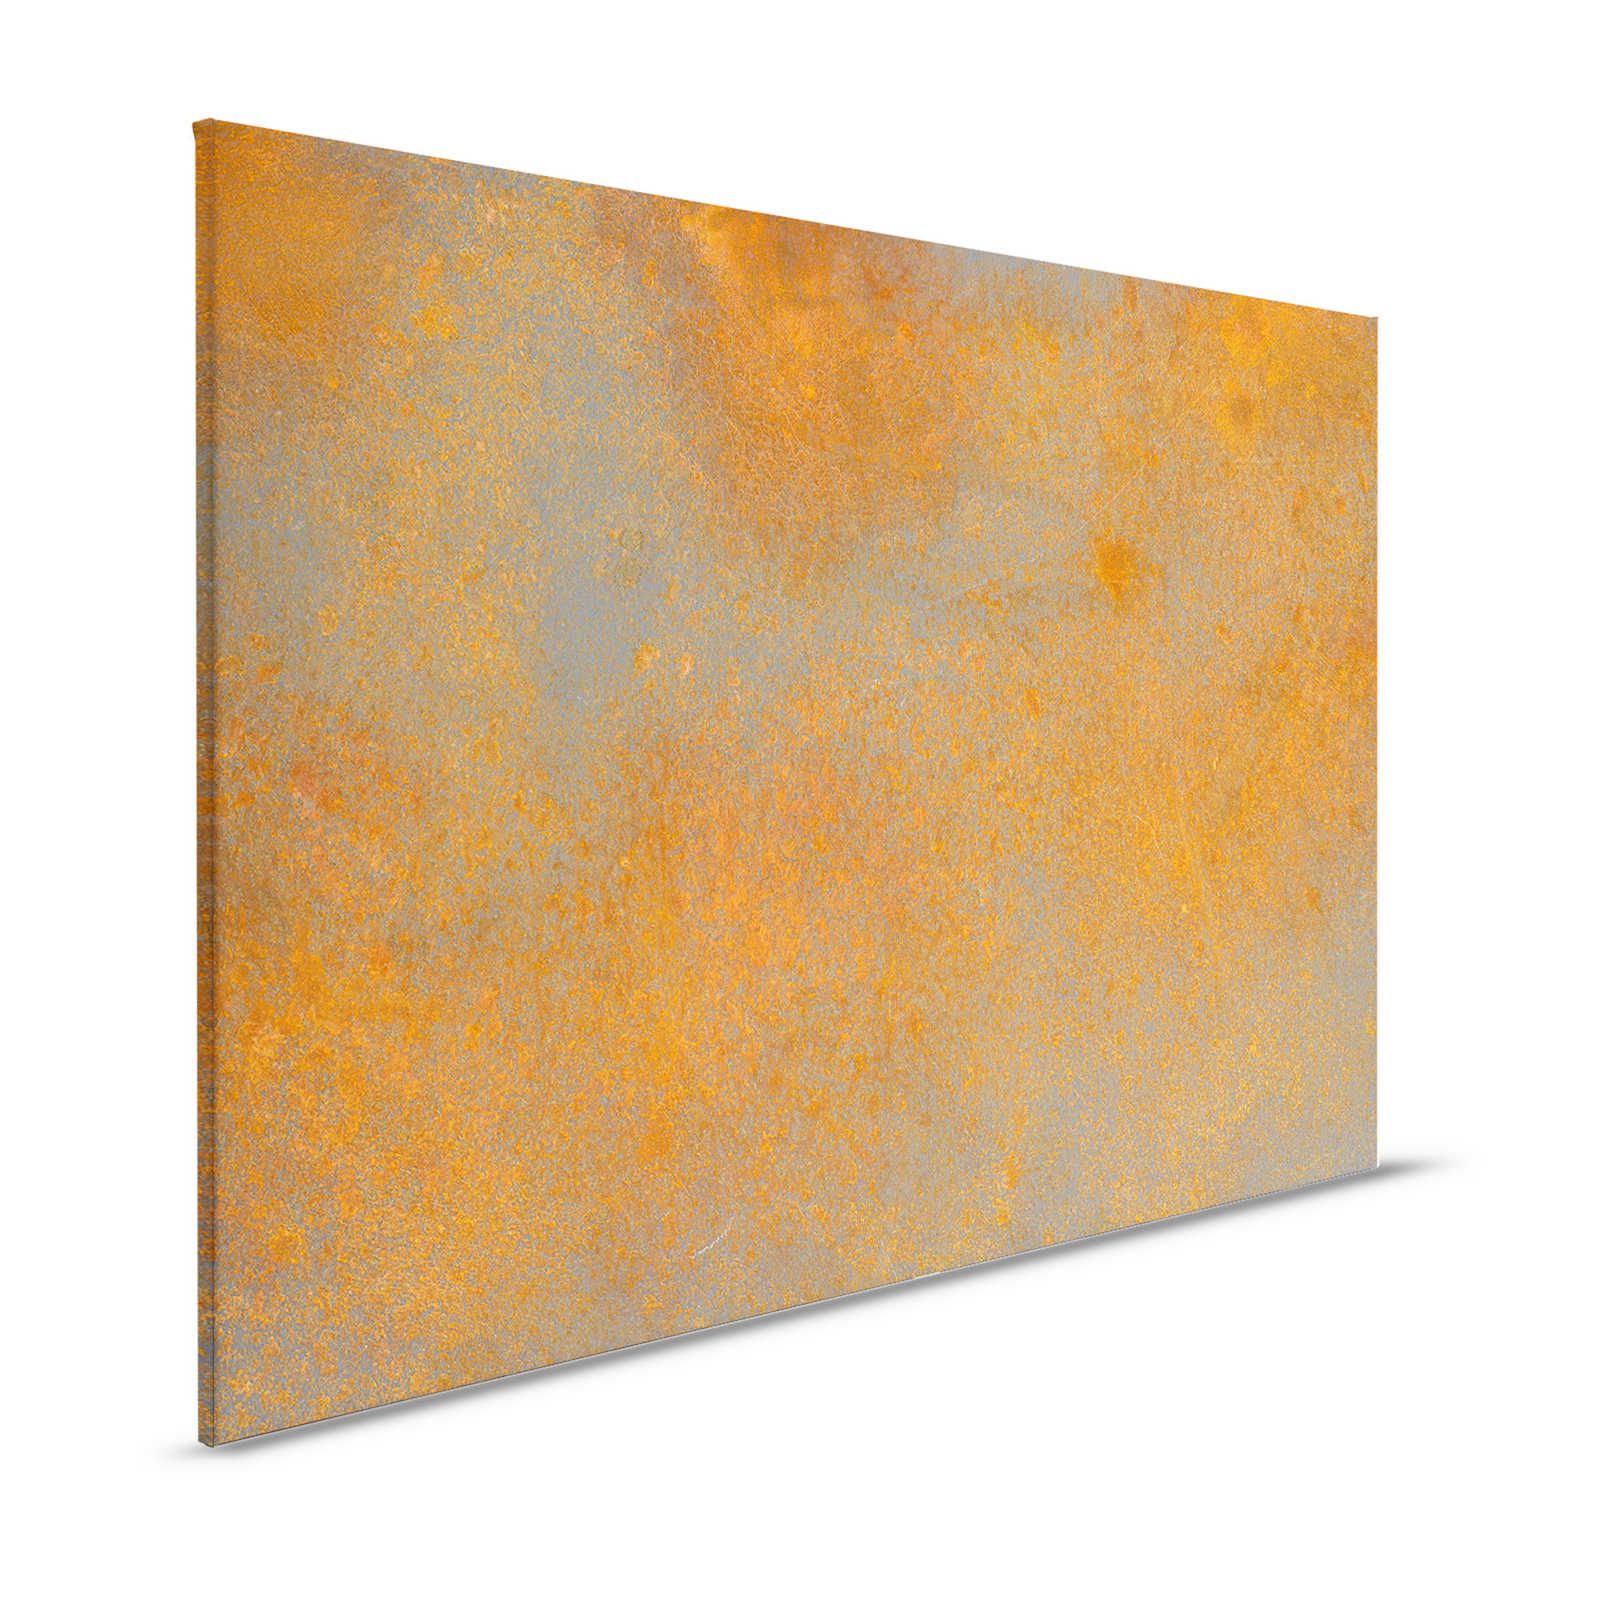 Lienzo Óptica Óxido Naranja Marrón con Aspecto Usado - 1,20 m x 0,80 m
